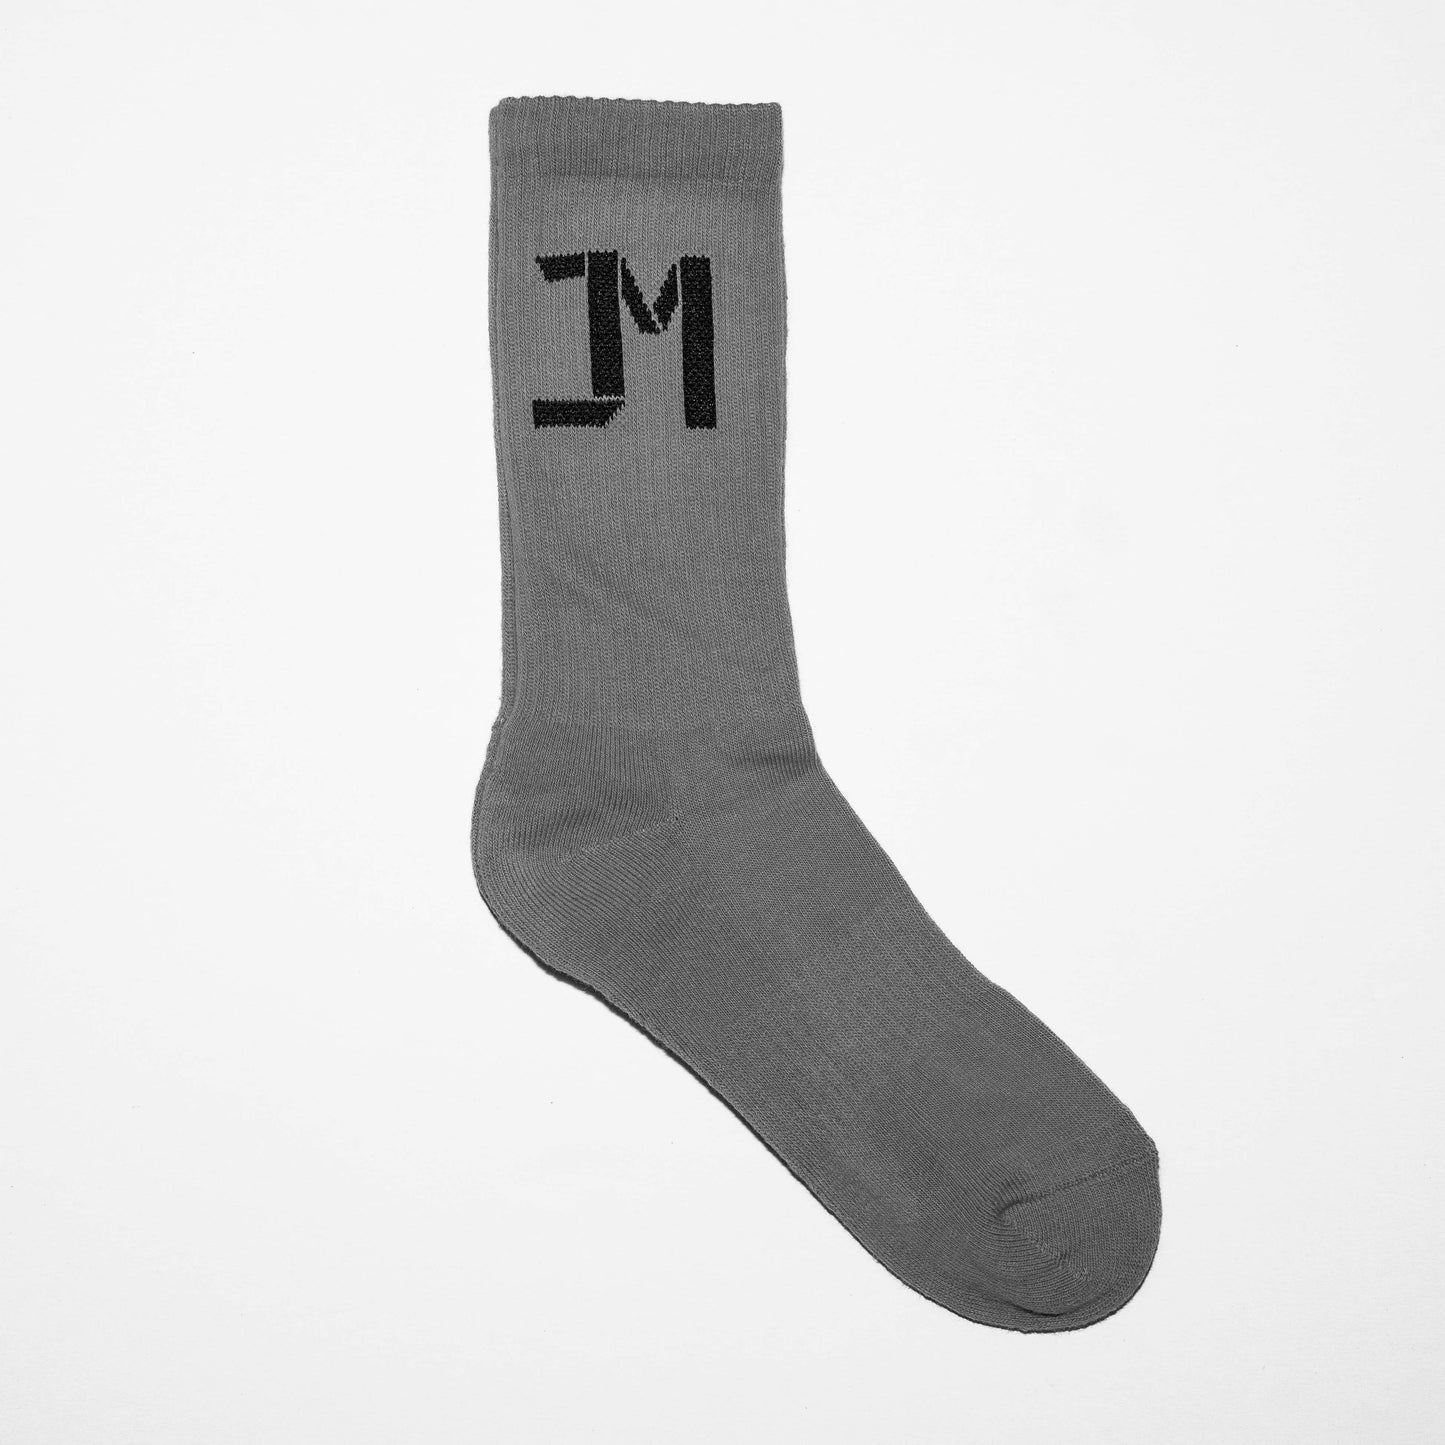 JM Socks